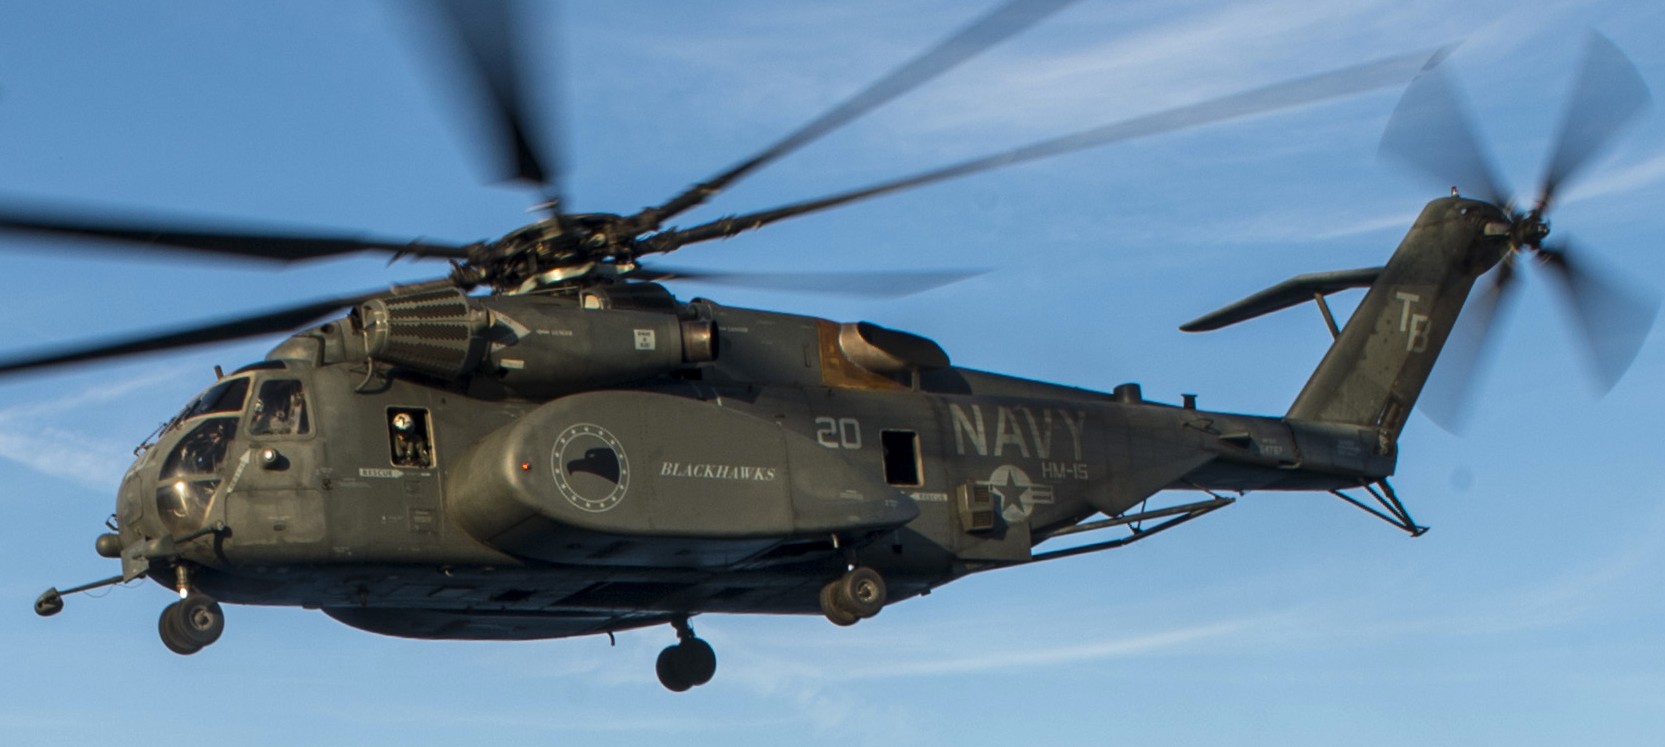 hm-15 blackhawks helicopter mine countermeasures squadron navy mh-53e sea dragon norfolk virginia 41x